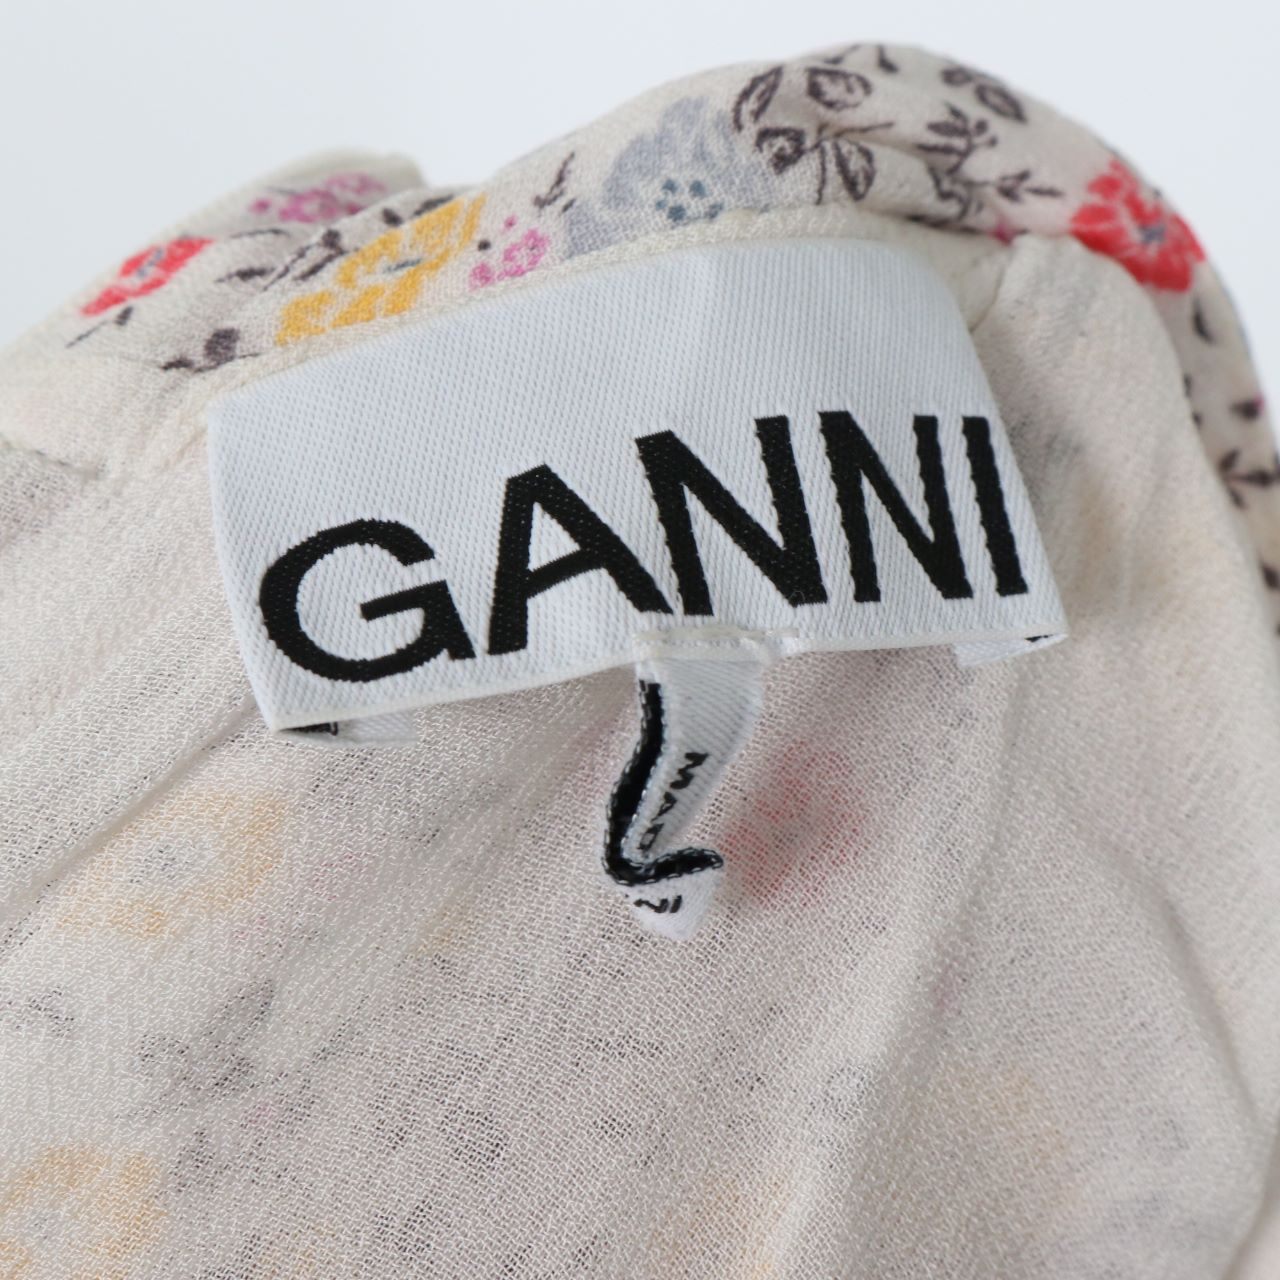 Ganni(ガニー)